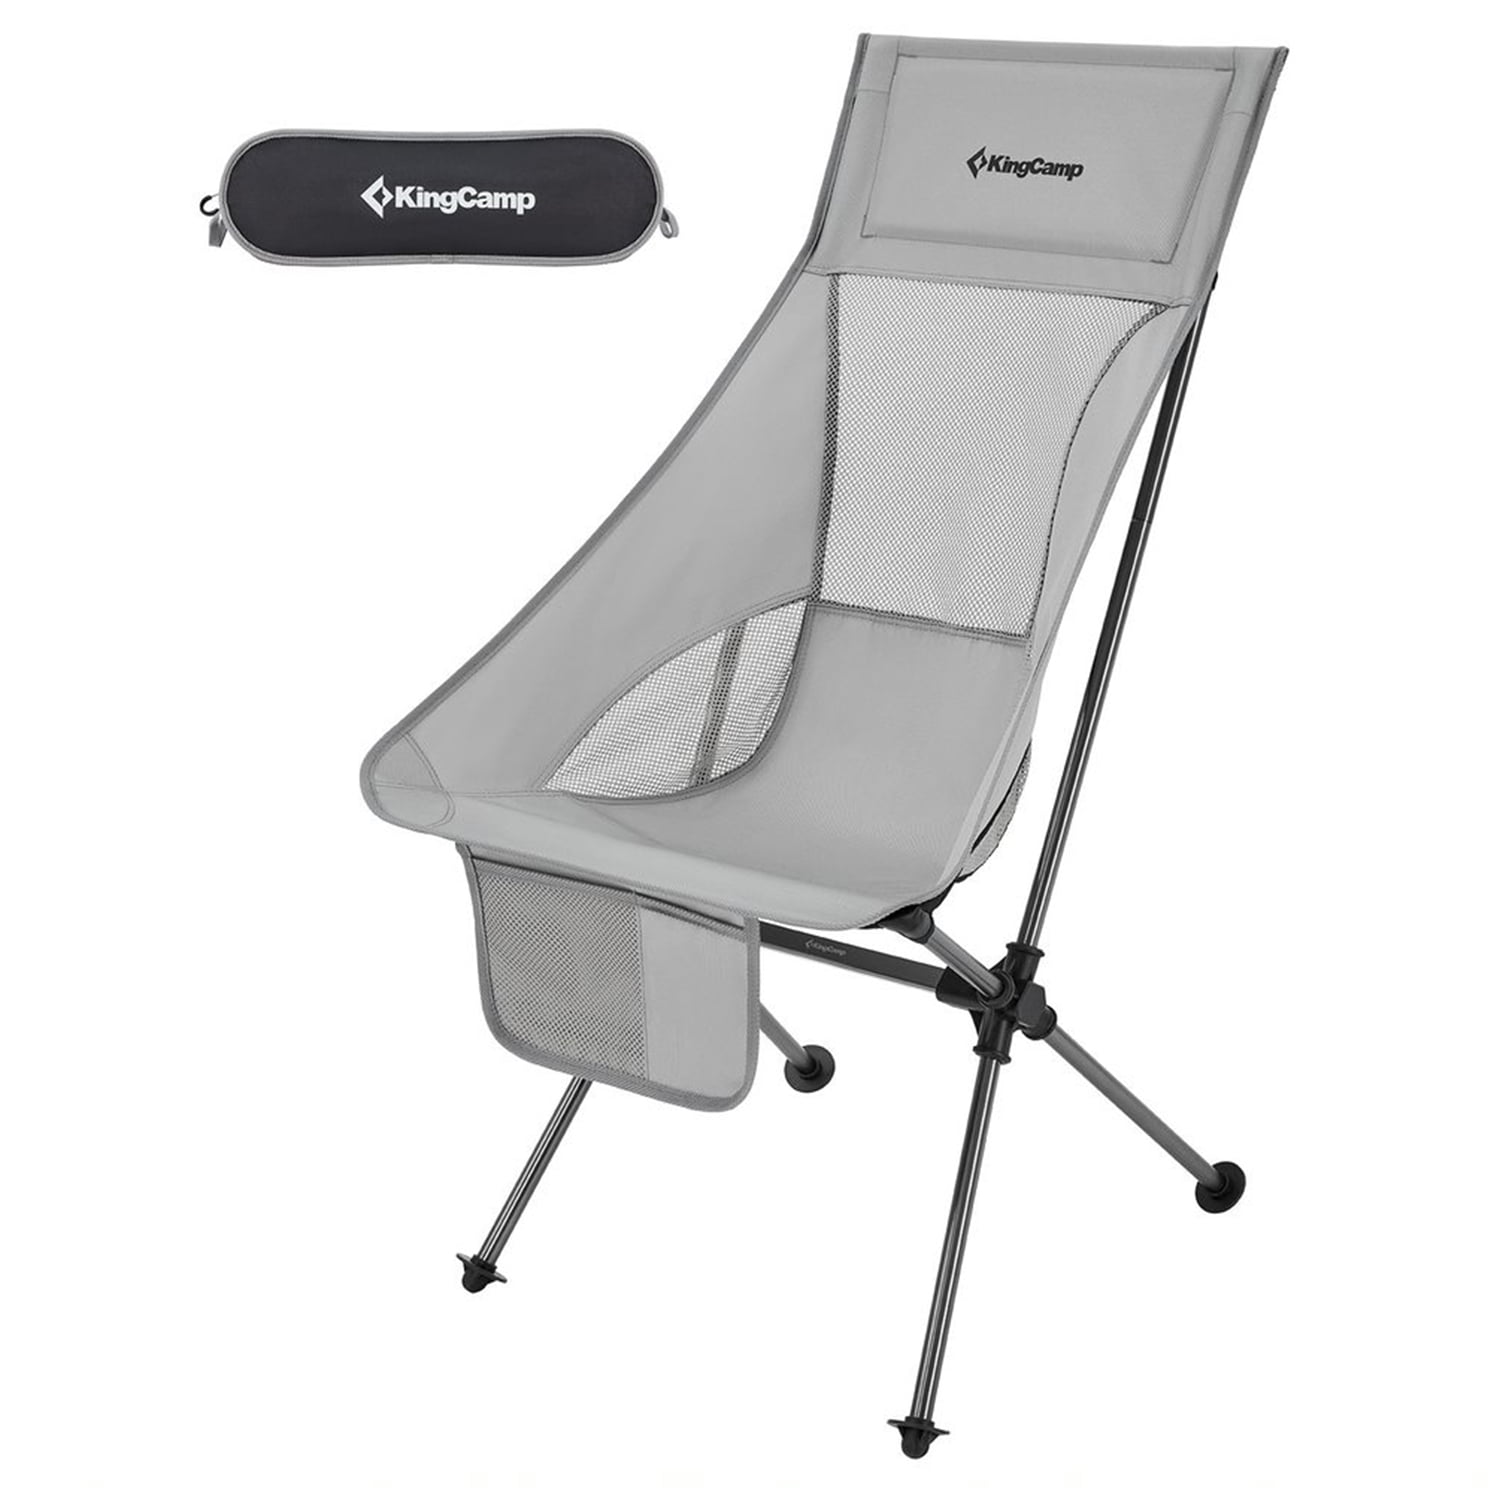 KingCamp Ultralight High Back Portable Camping Folding Chair w/ Bag, Gray